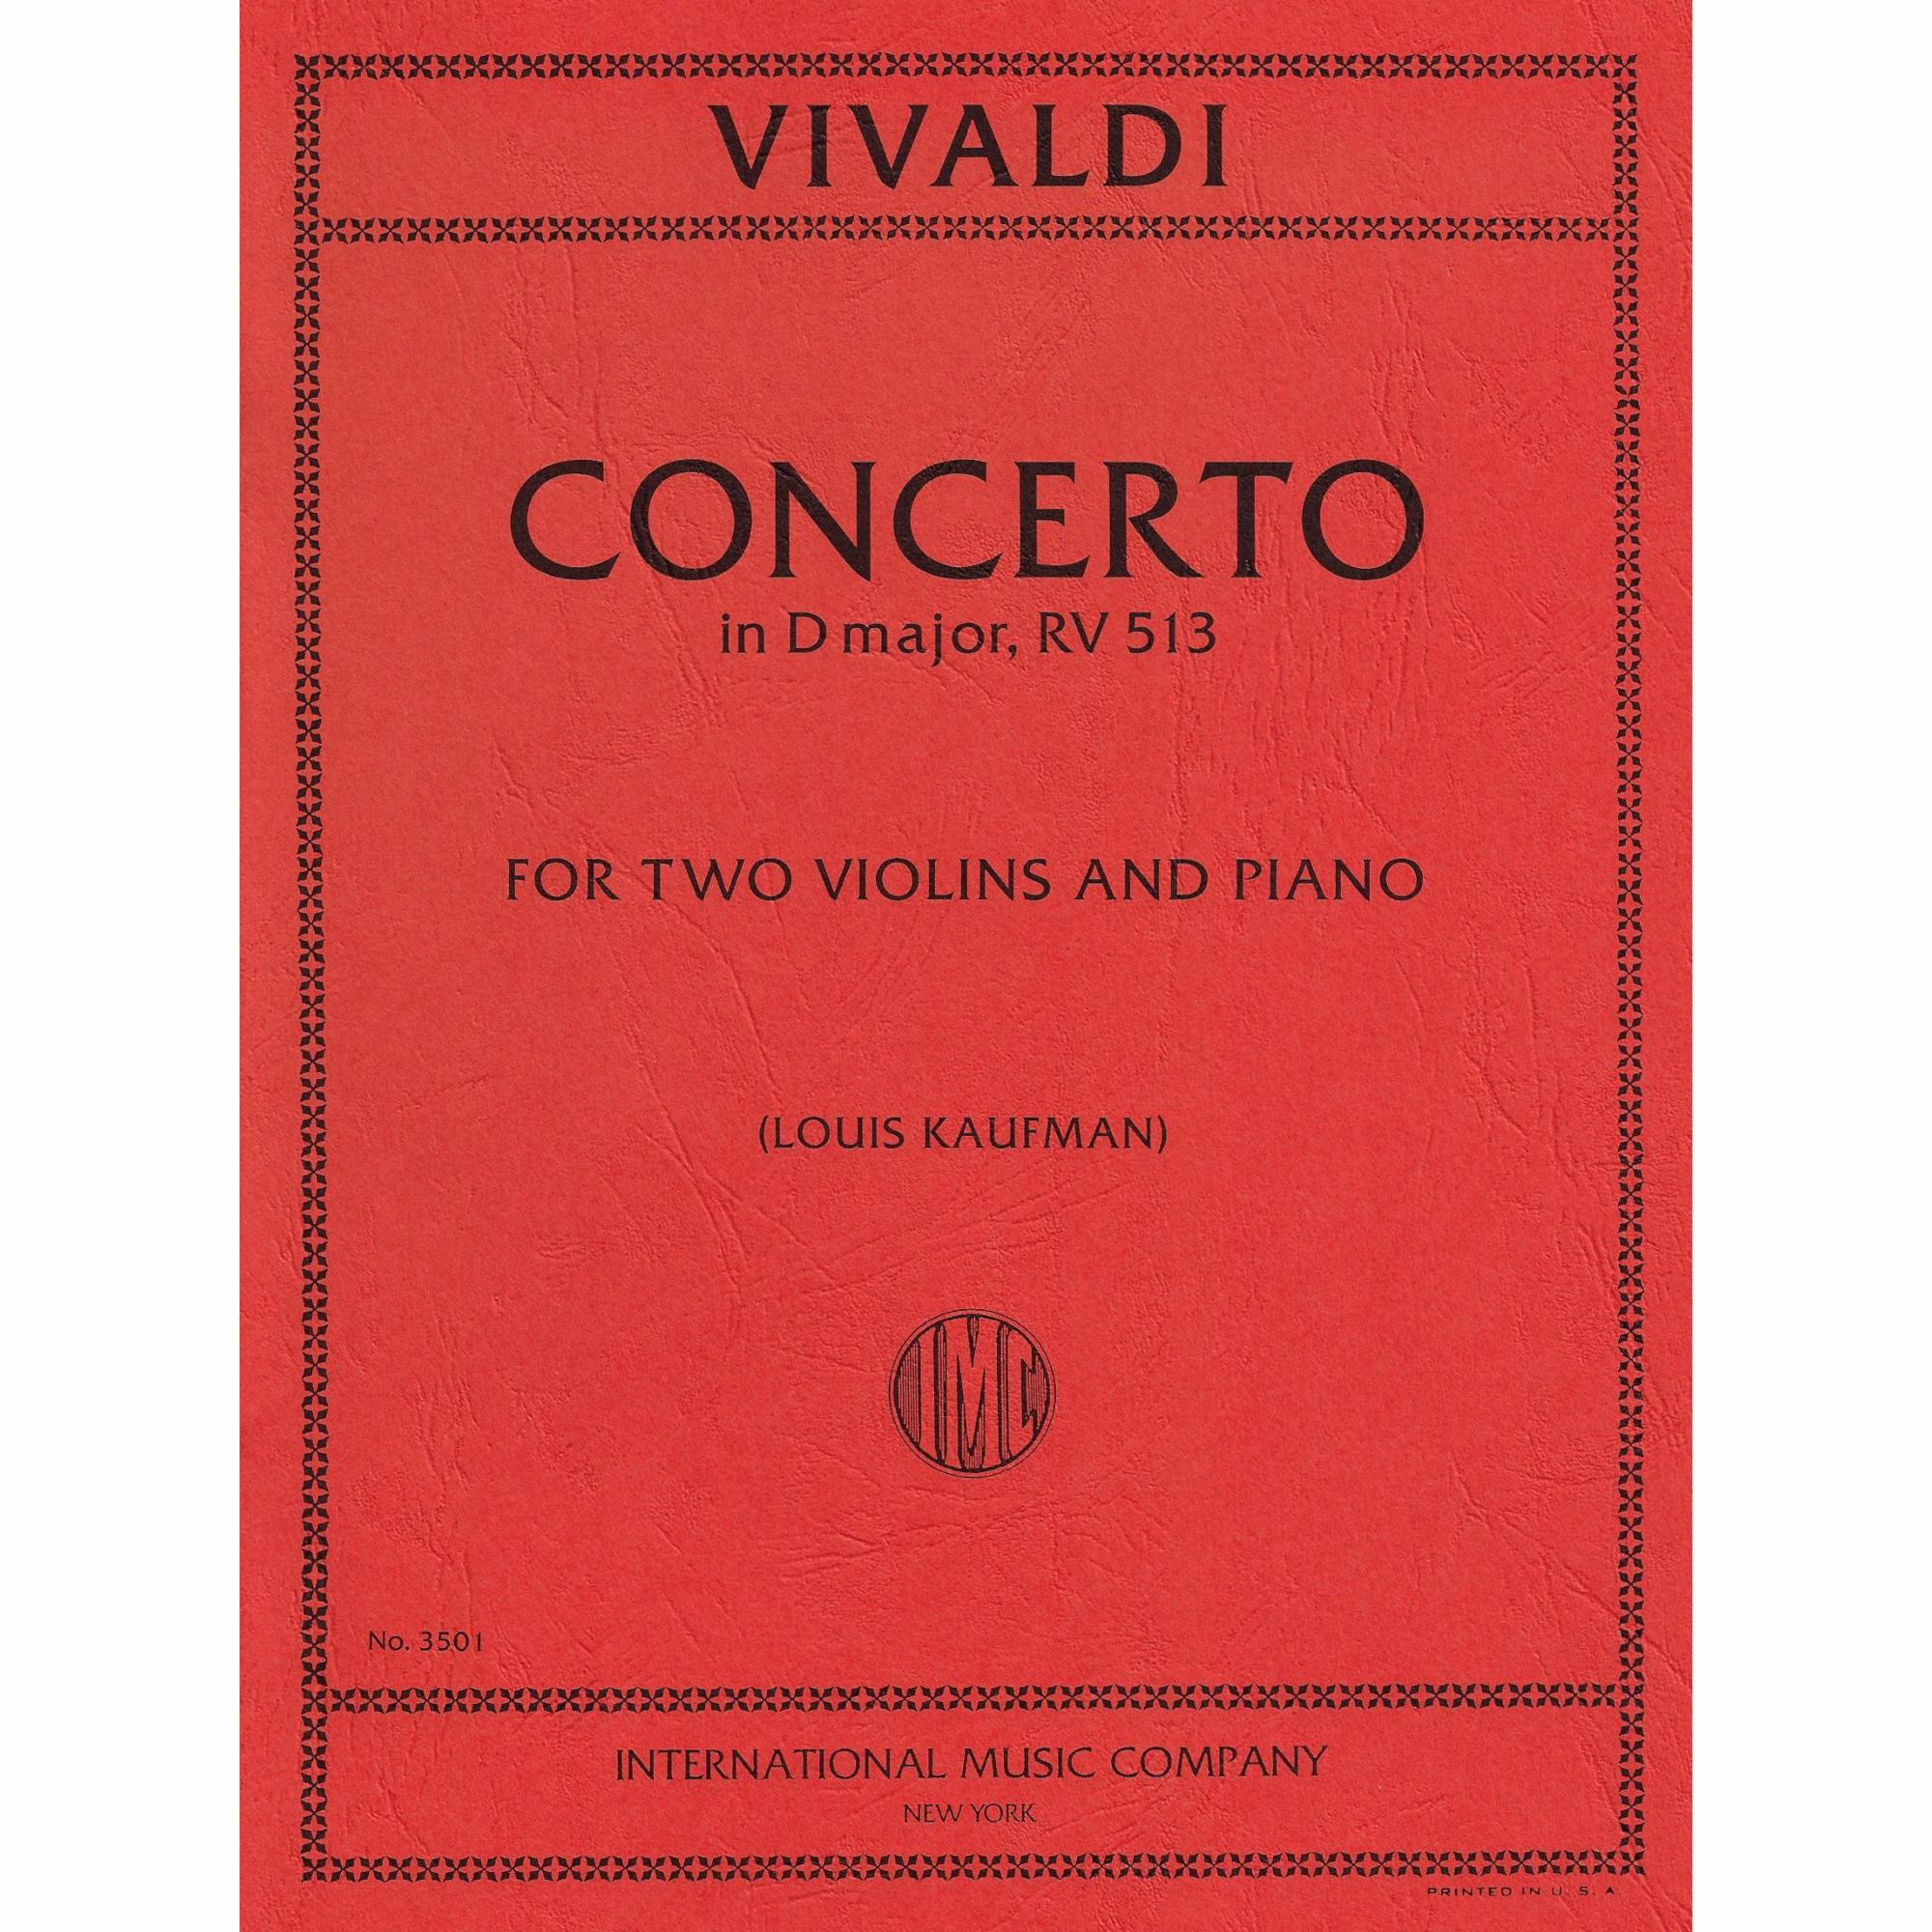 Vivaldi -- Concerto in D Major, RV 513 for Two Violins and Piano